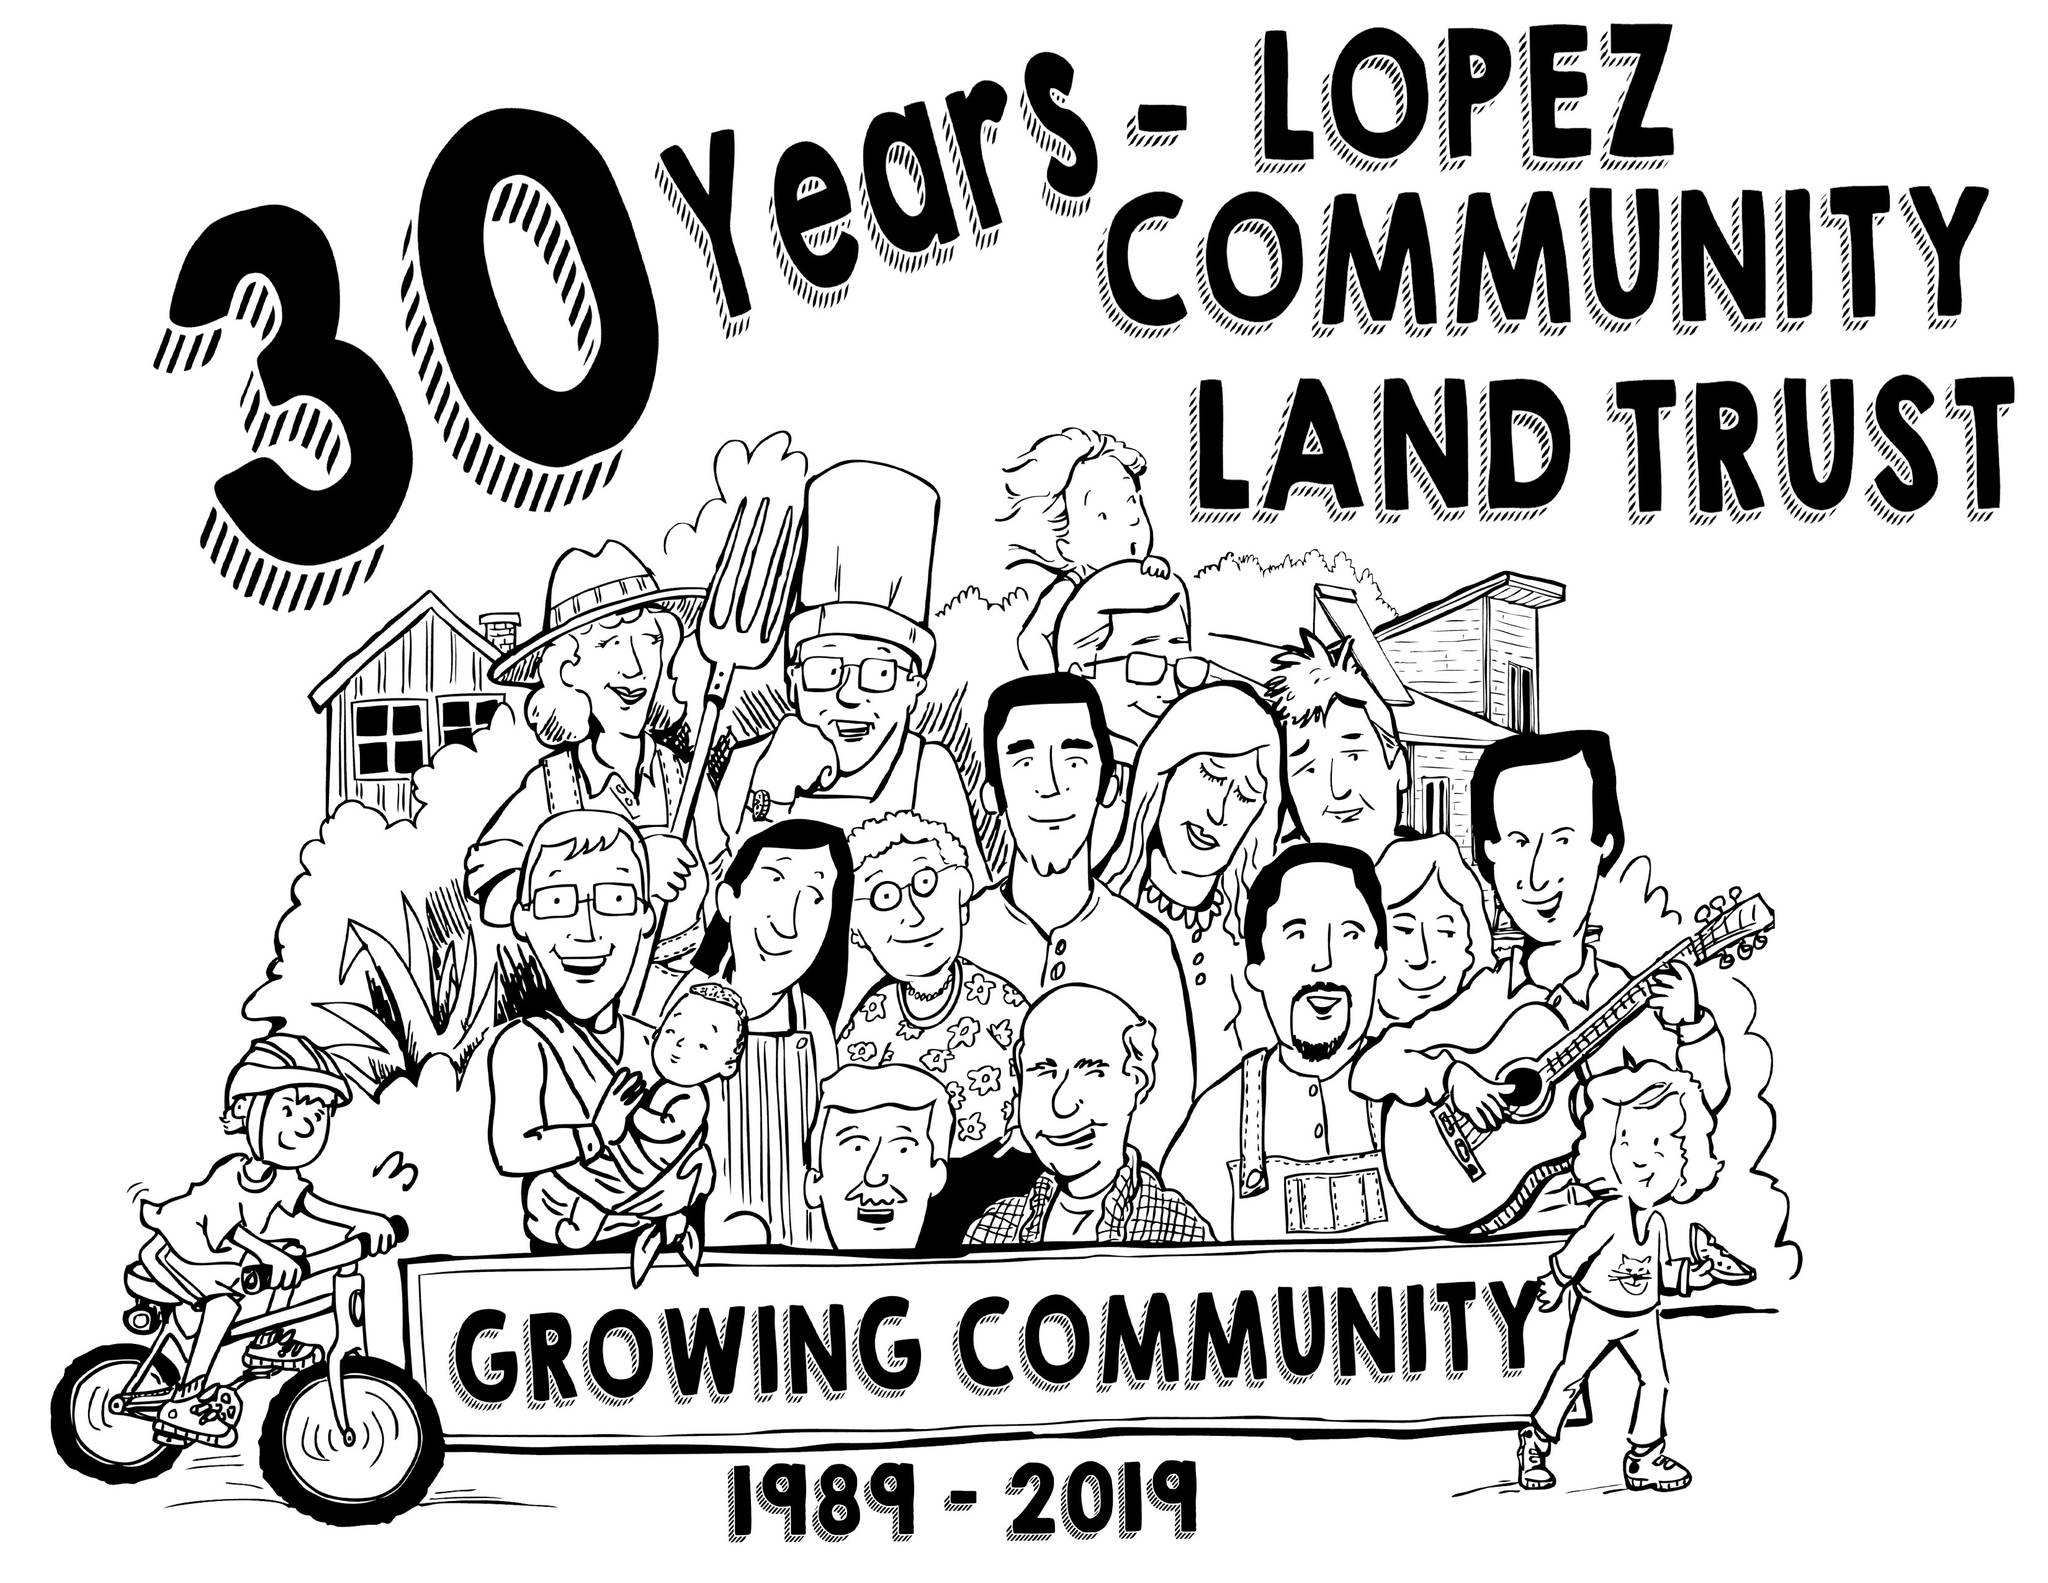 Lopez Community Land Trust enters fourth decade